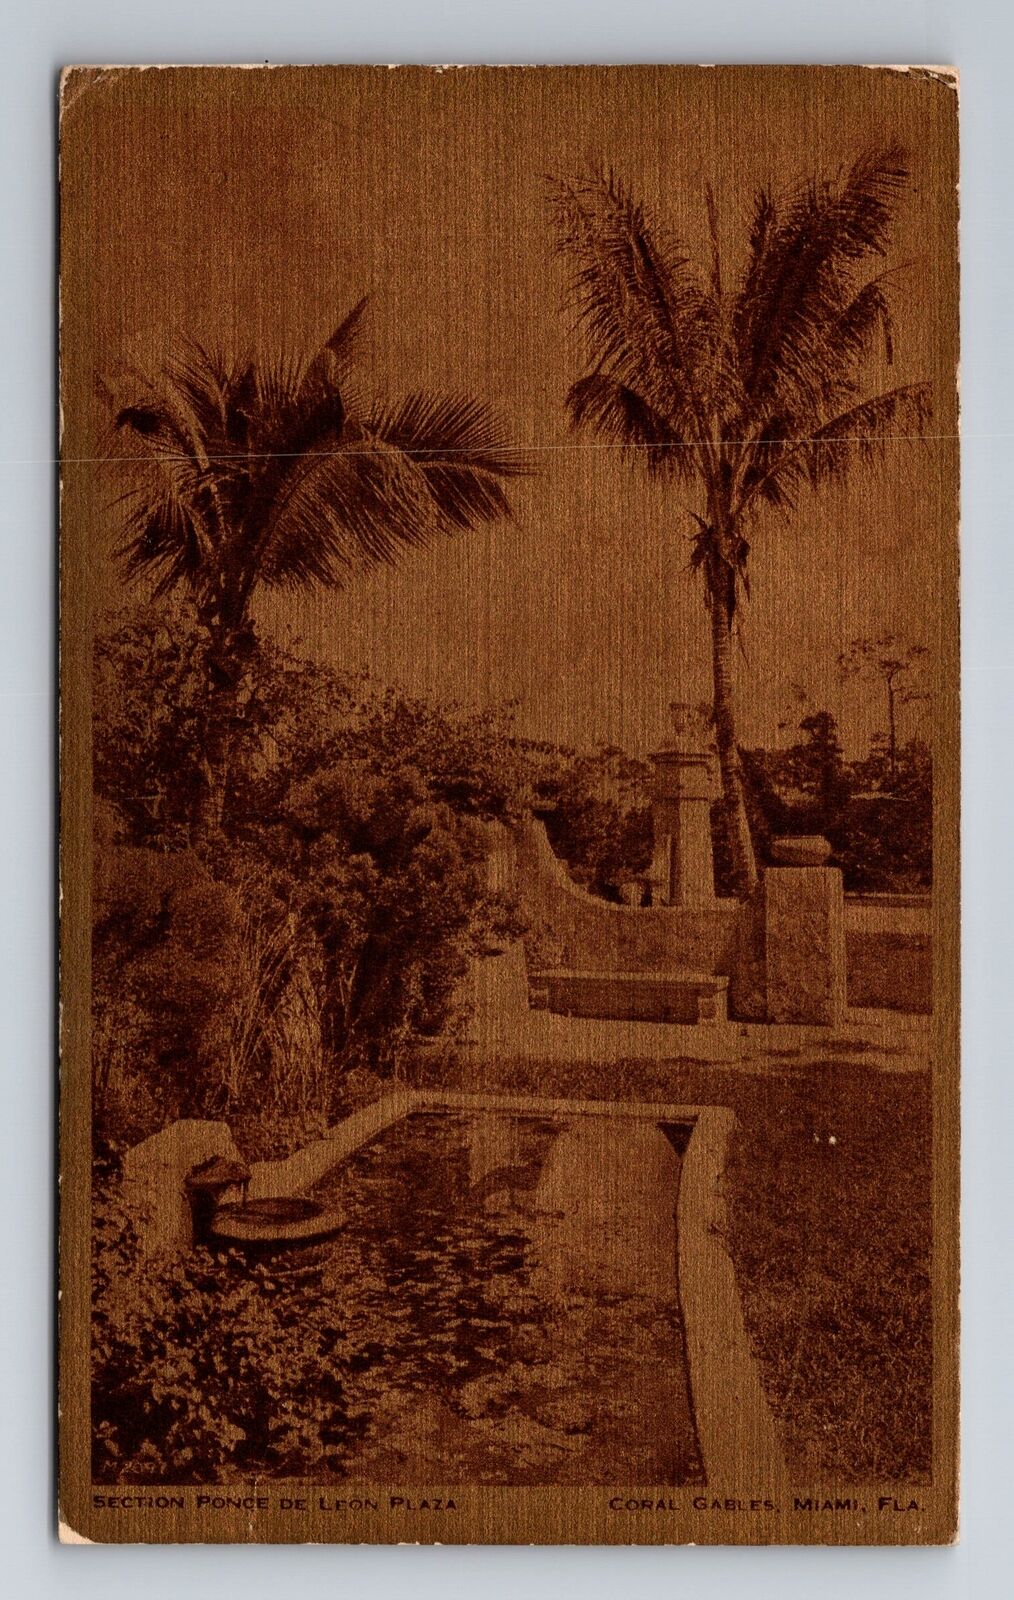 Miami FL-Florida, Coral Gables, Antique, Vintage Souvenir Postcard